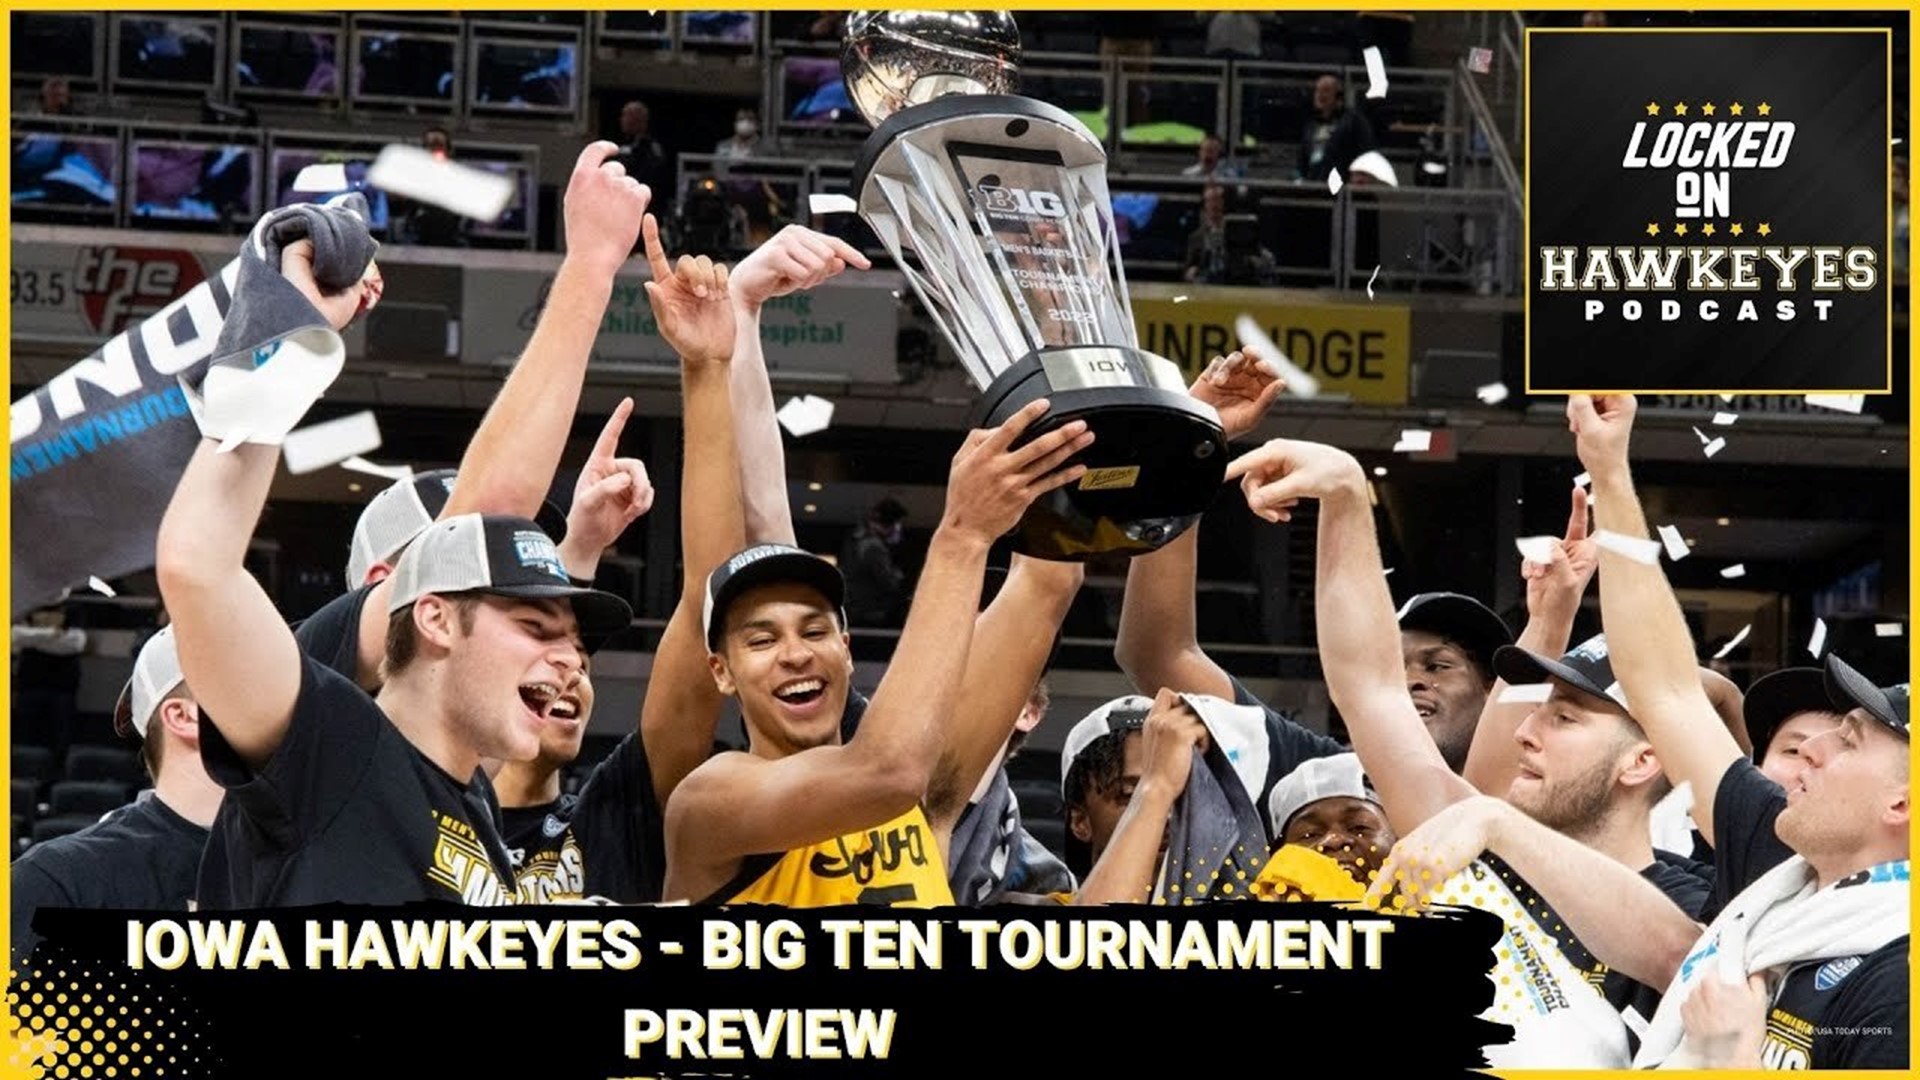 Iowa Hawkeyes Big Ten Tournament preview, NCAA Wrestling Brackets released